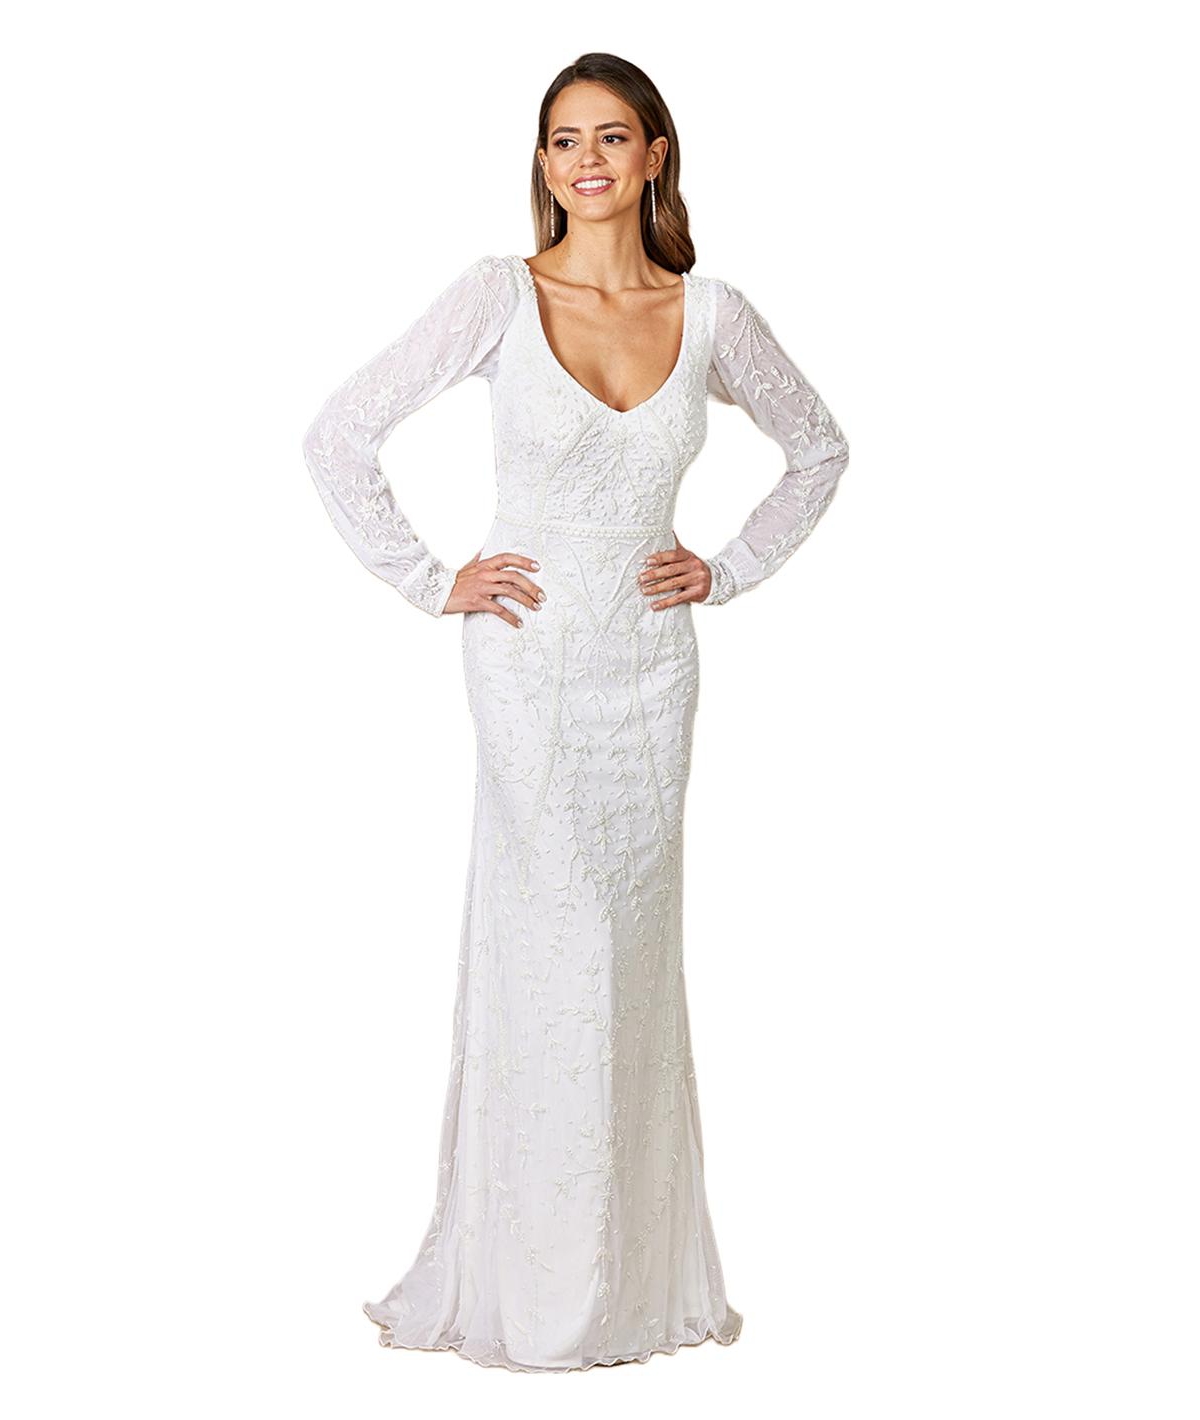 Women's Gigi Romantic Long Sleeve Wedding Dress - Ivory